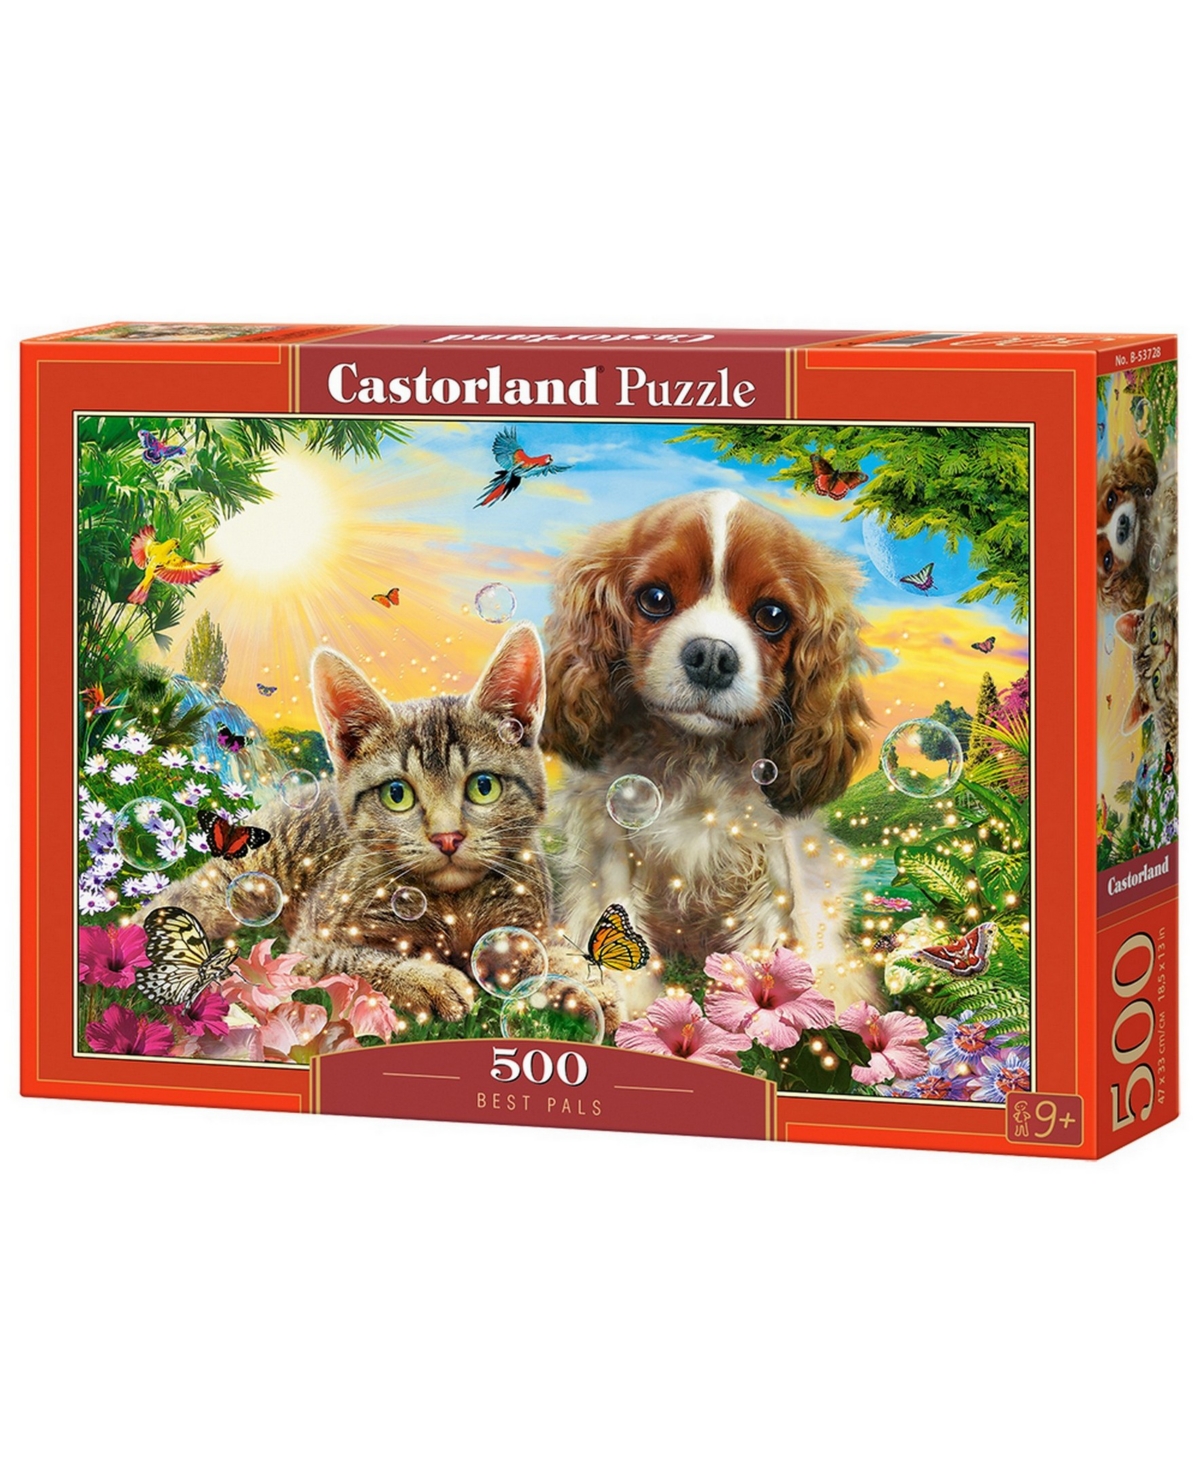 Castorland Best Pals Jigsaw Puzzle Set, 500 Piece In Multicolor